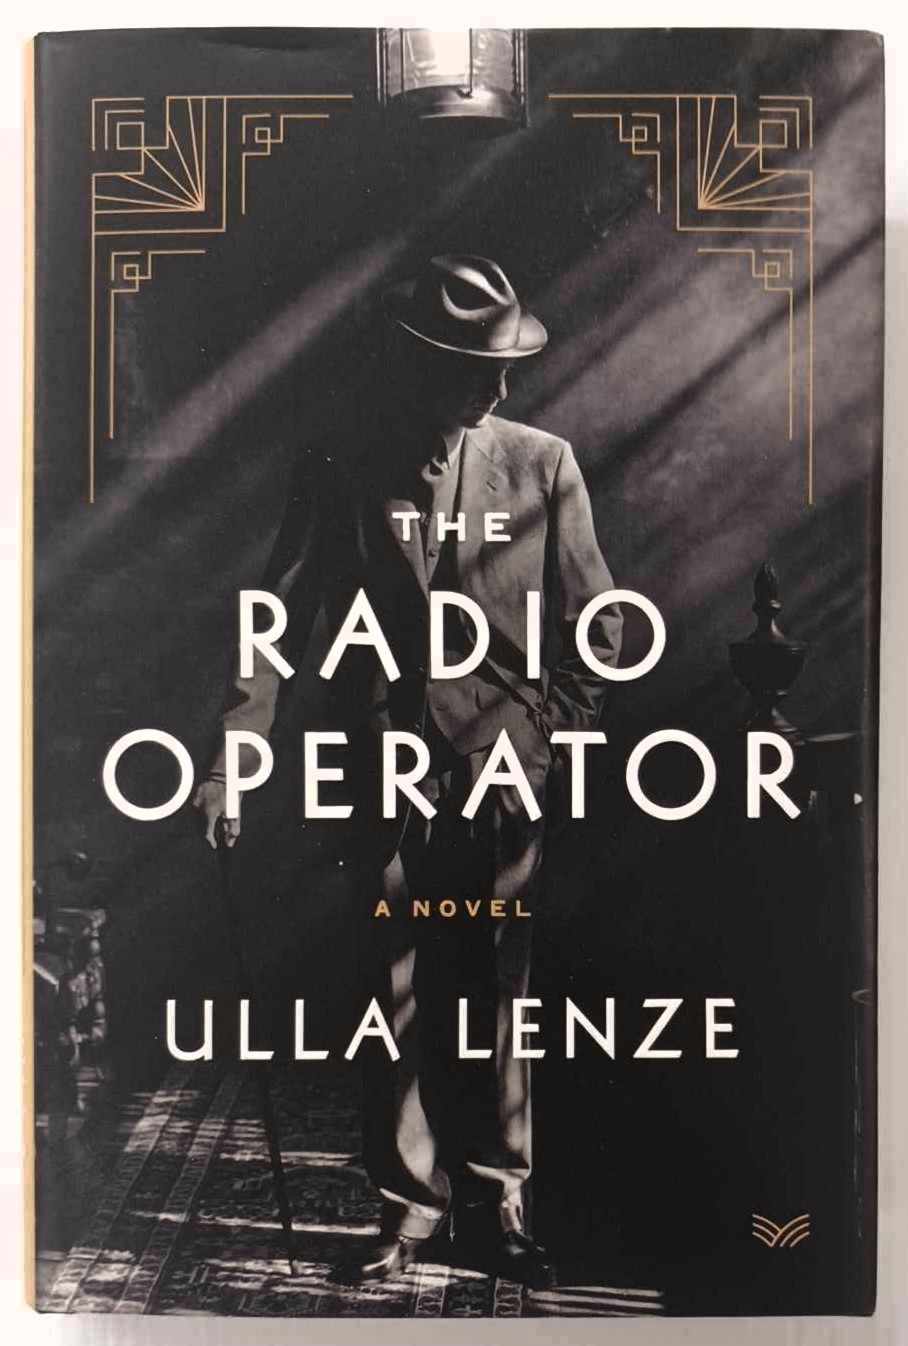 THE RADIO OPERATOR - Ulla Lenze